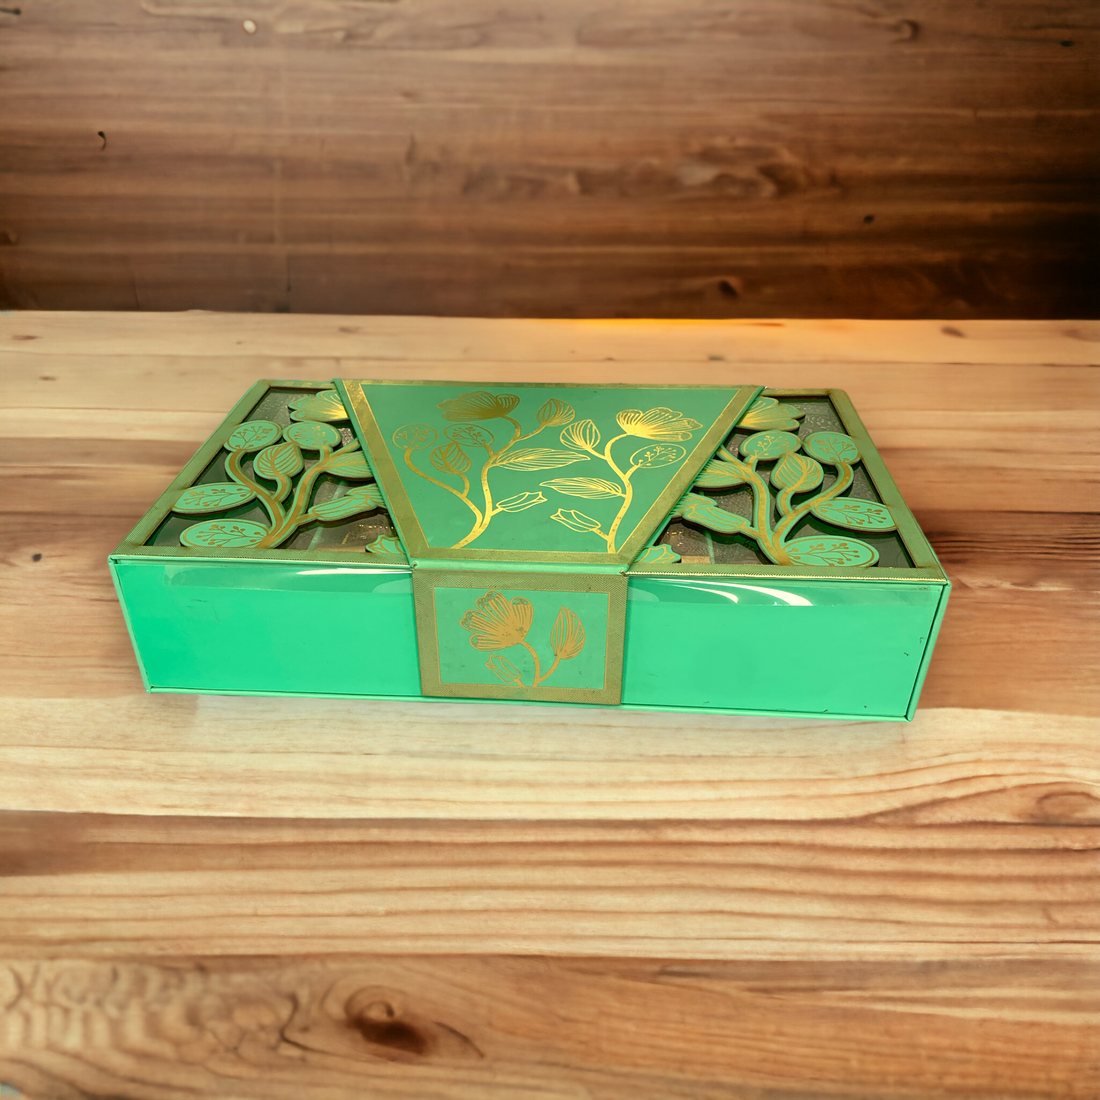 Triple Door Green Box with 2 Jars & 16 Sq Cavities Packs